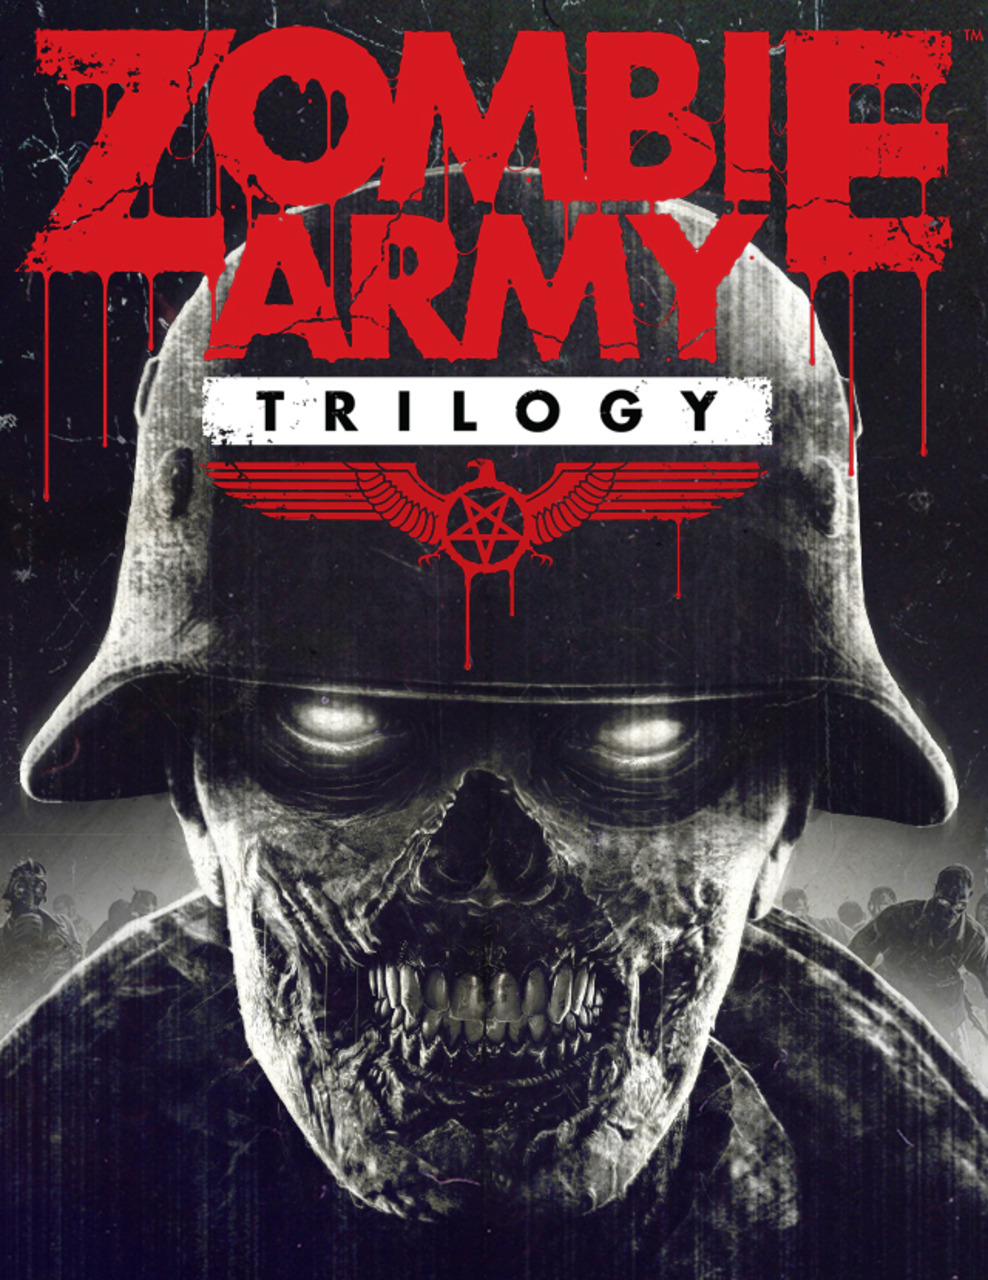 Зомби трилогия игра